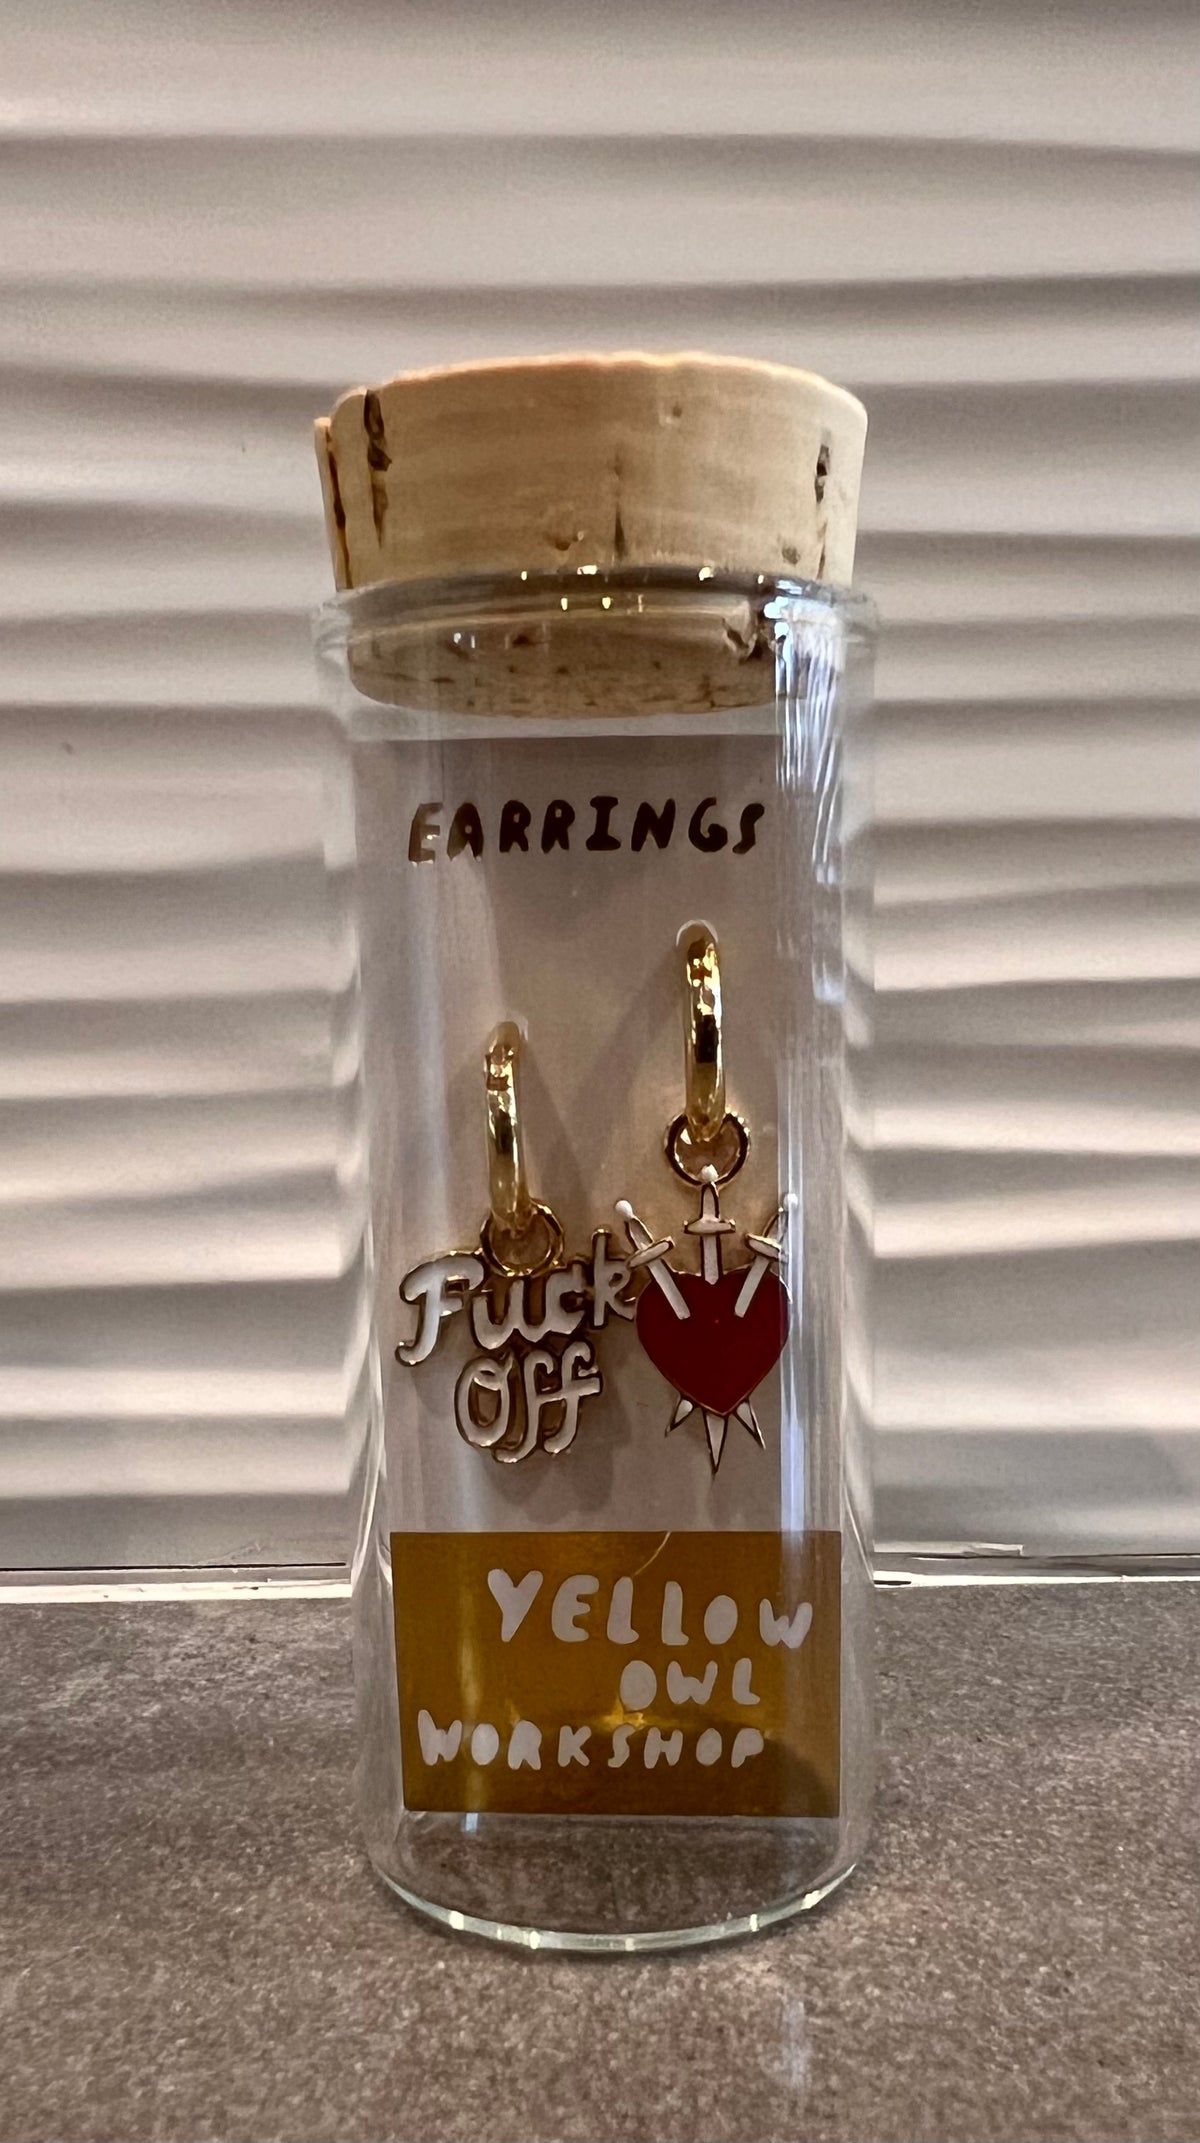 F*ck Off & Heart Hoop Earrings - Yellow Owl Workshop